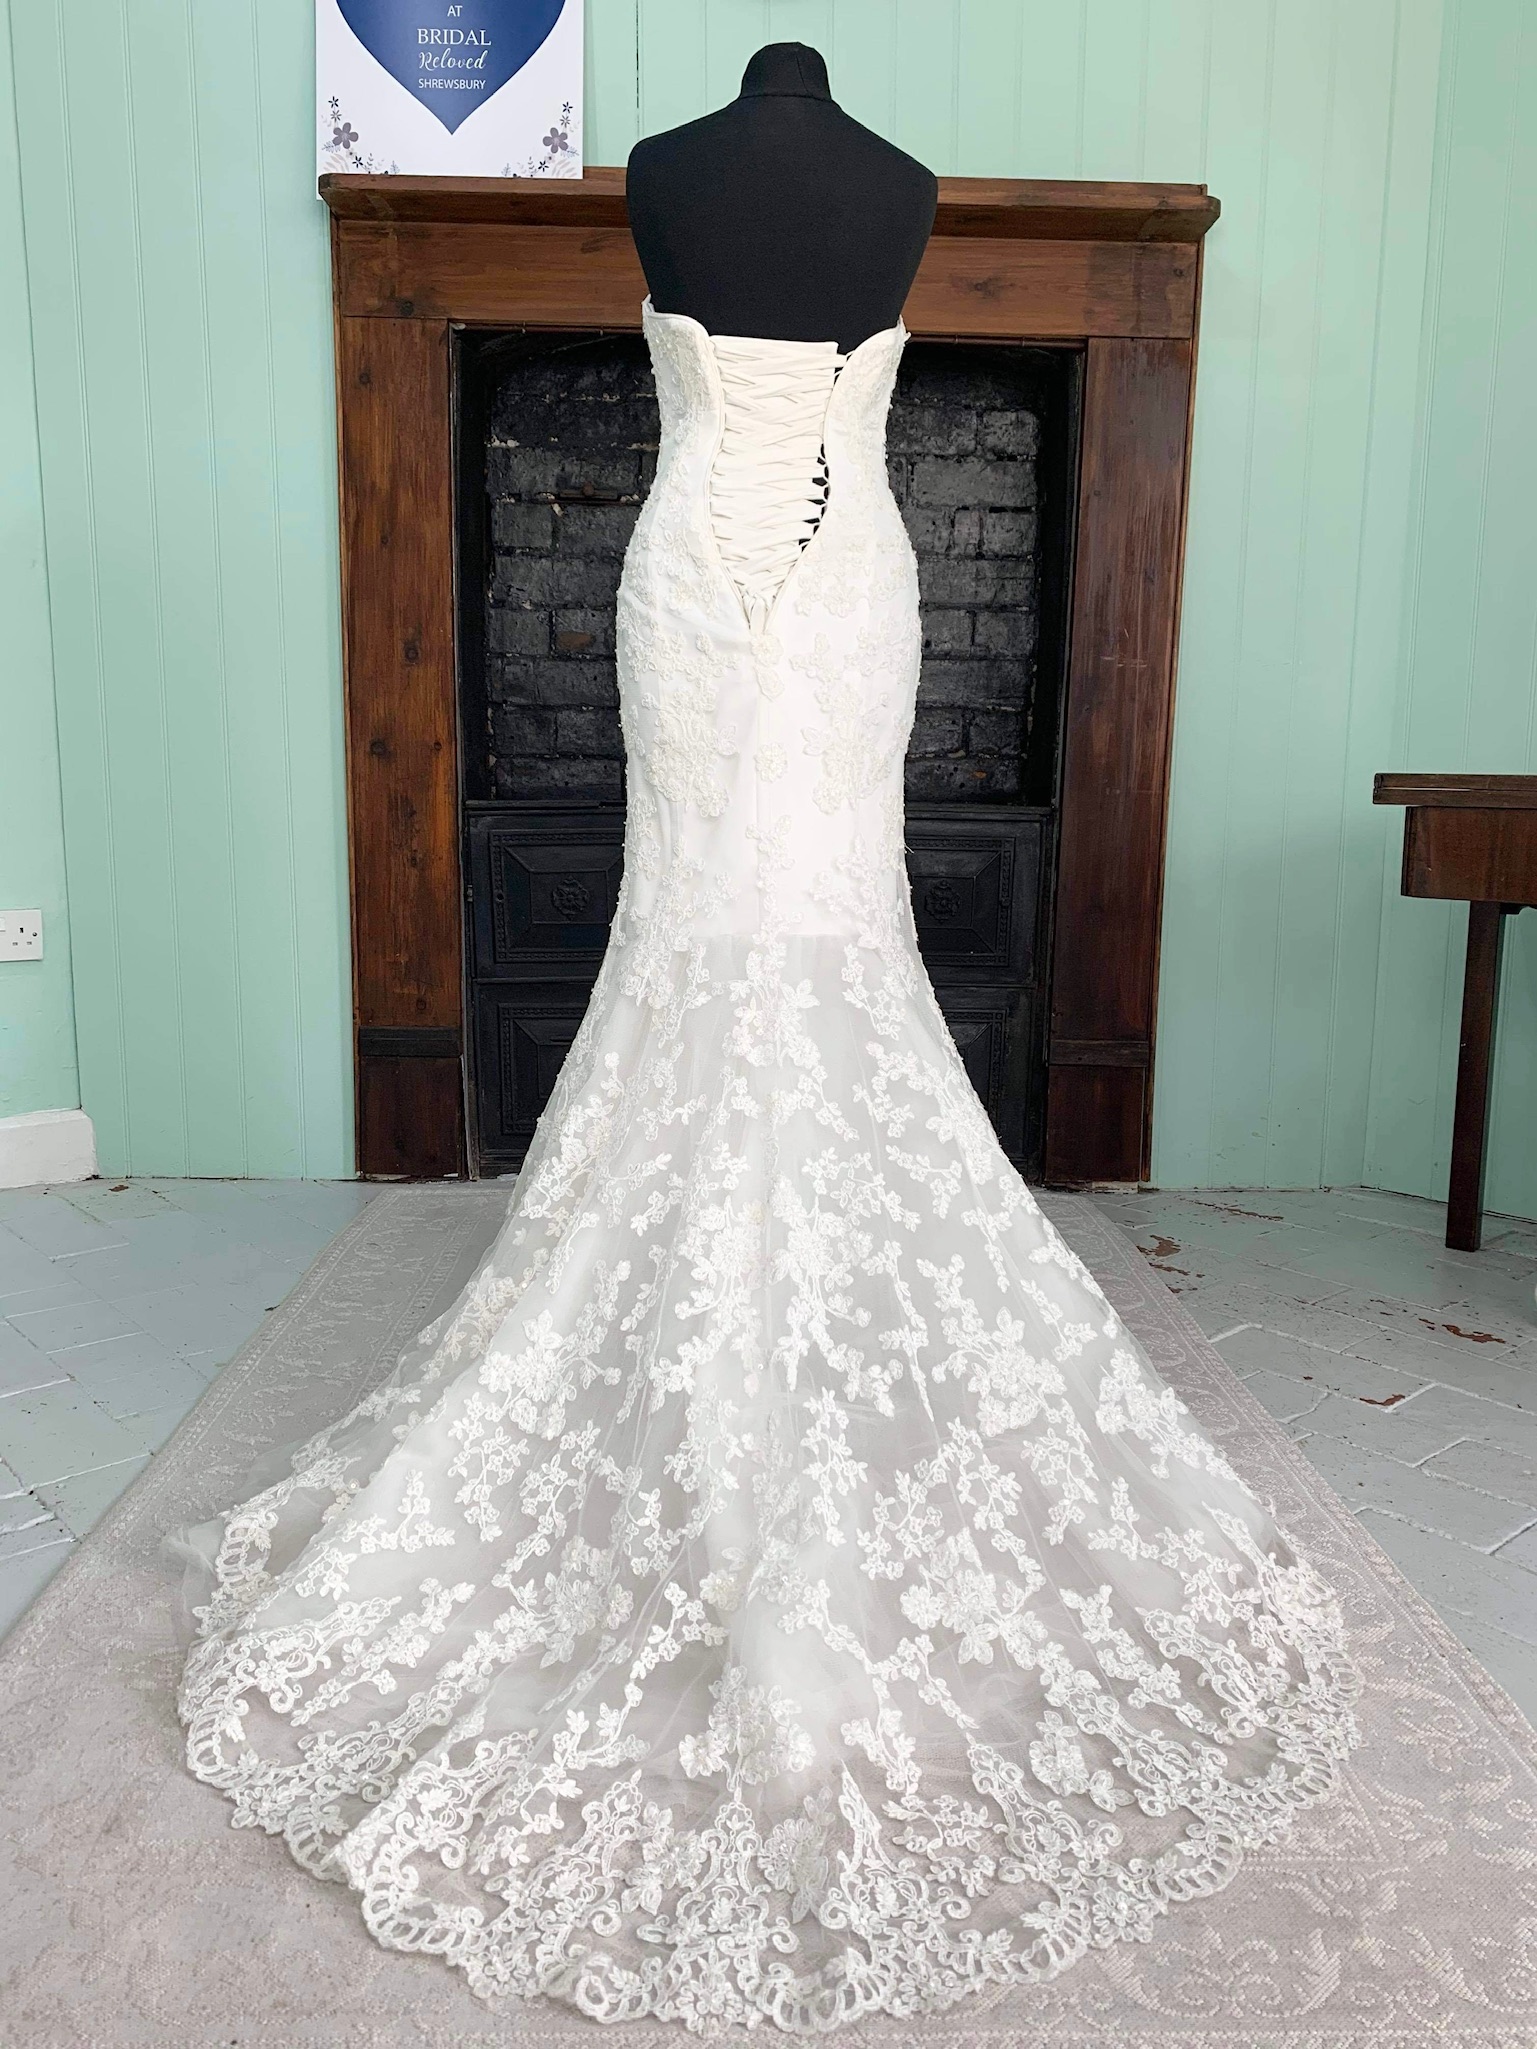 Forever Yours   Wedding Dress   Fishtail   SH8S   Bridal Reloved